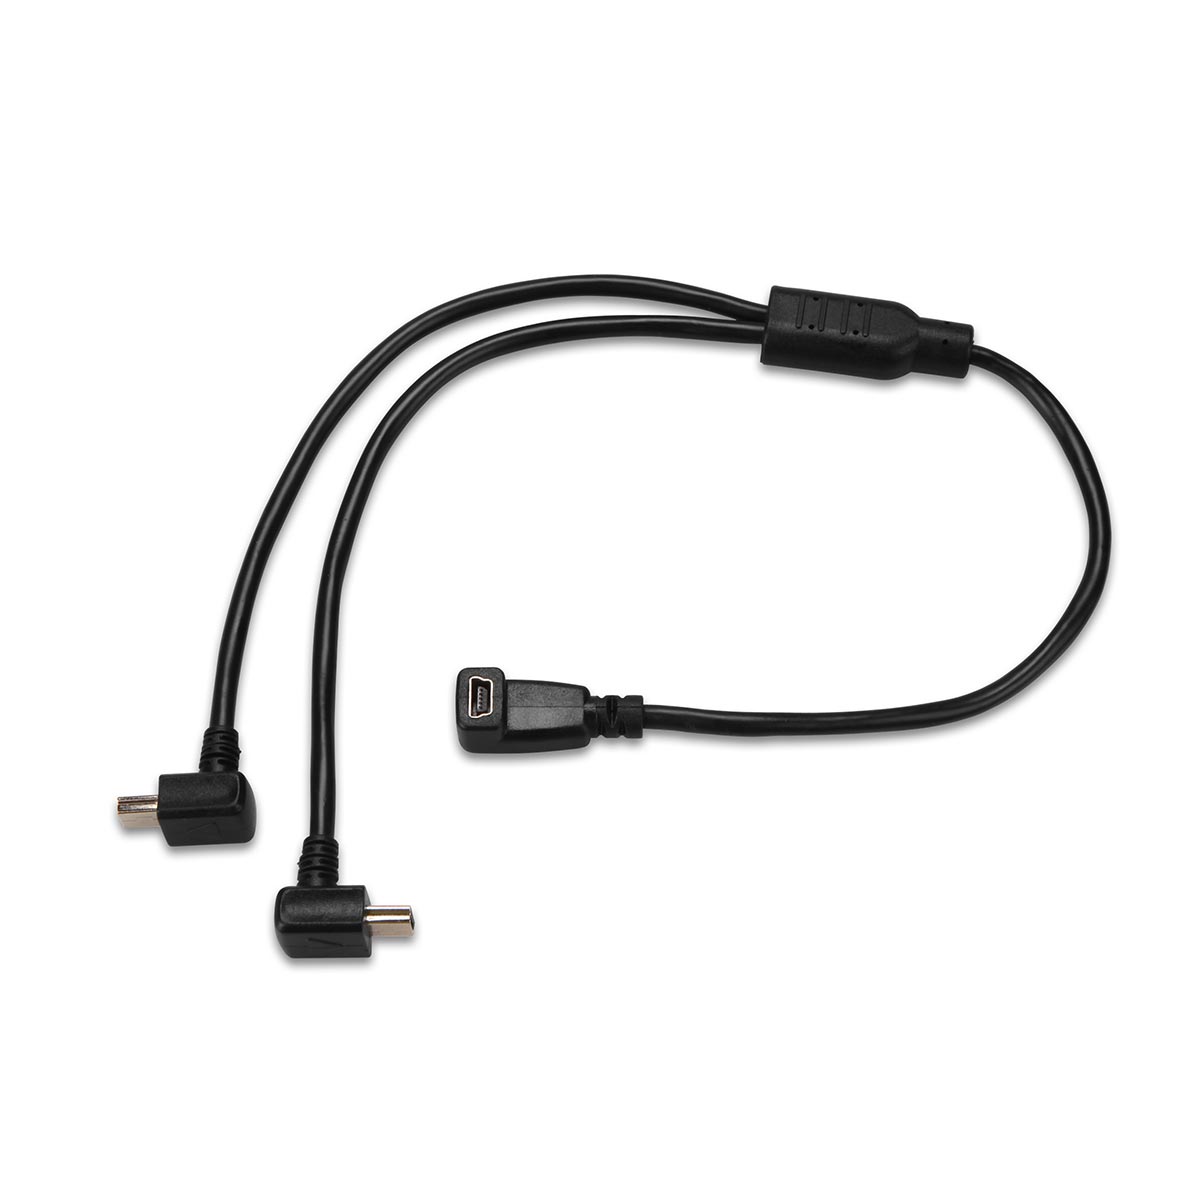 010-11828-01 Garmin Spliter Adapter Cable Black